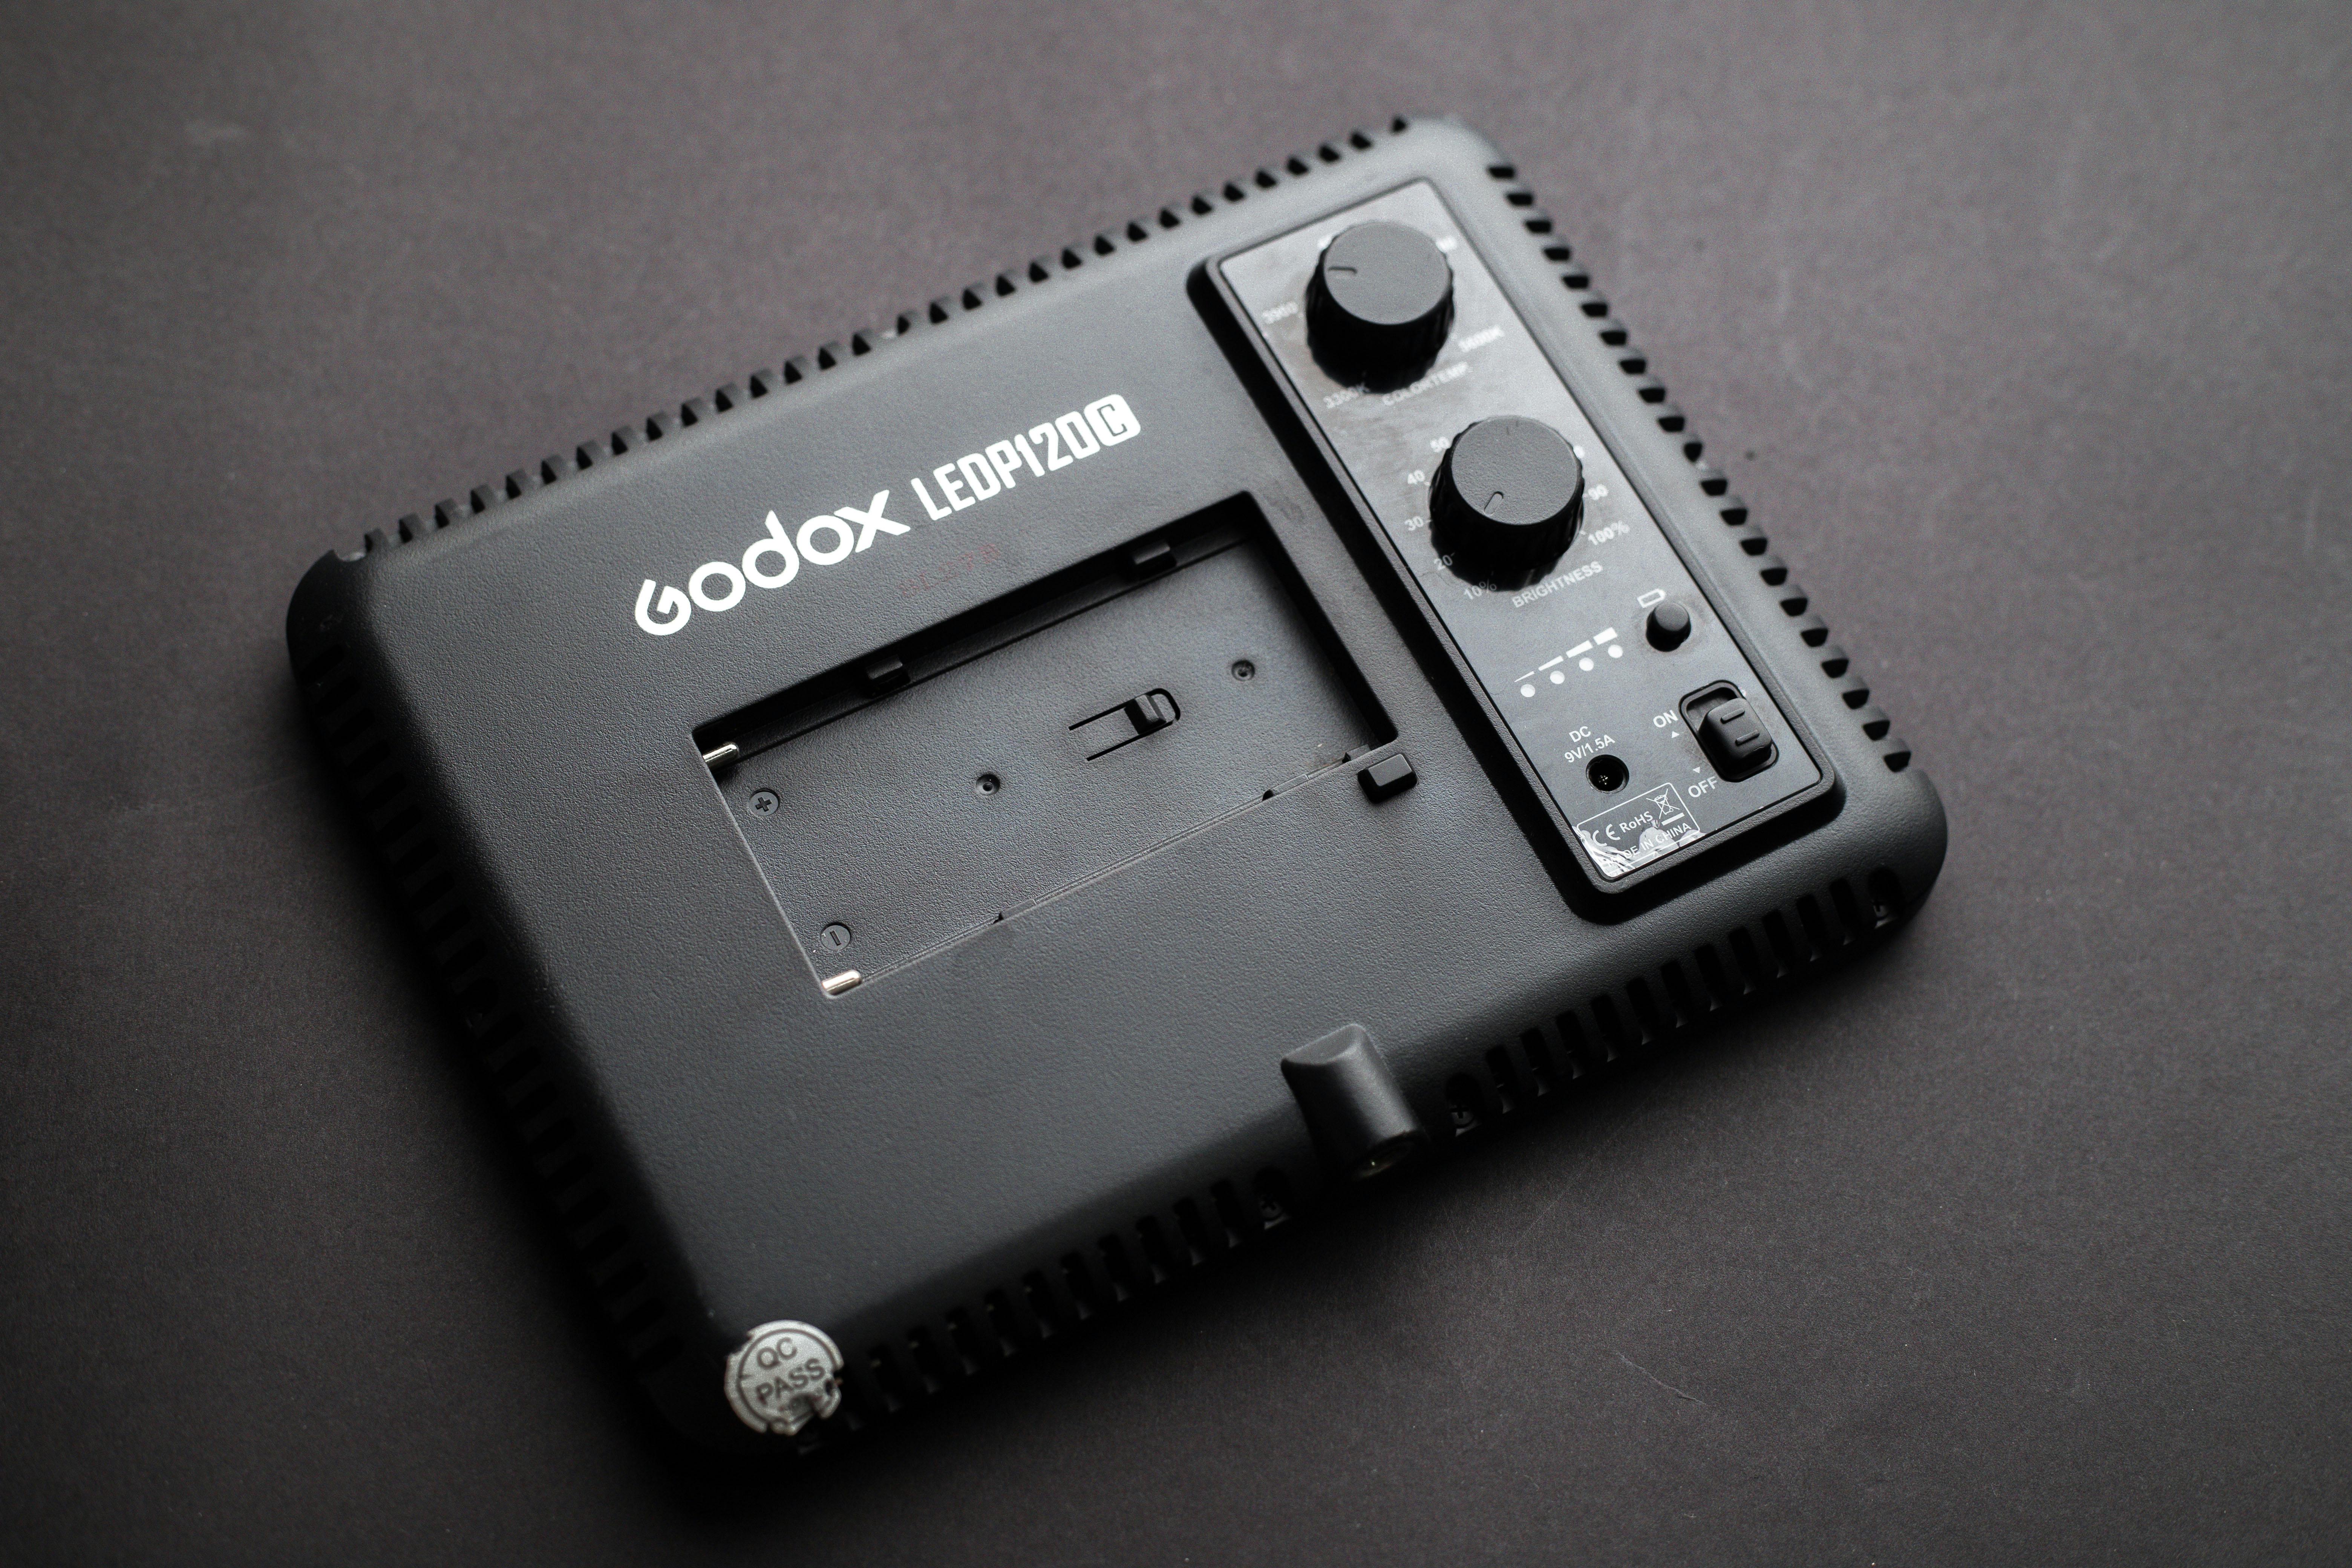 Black Godax Cordless Device